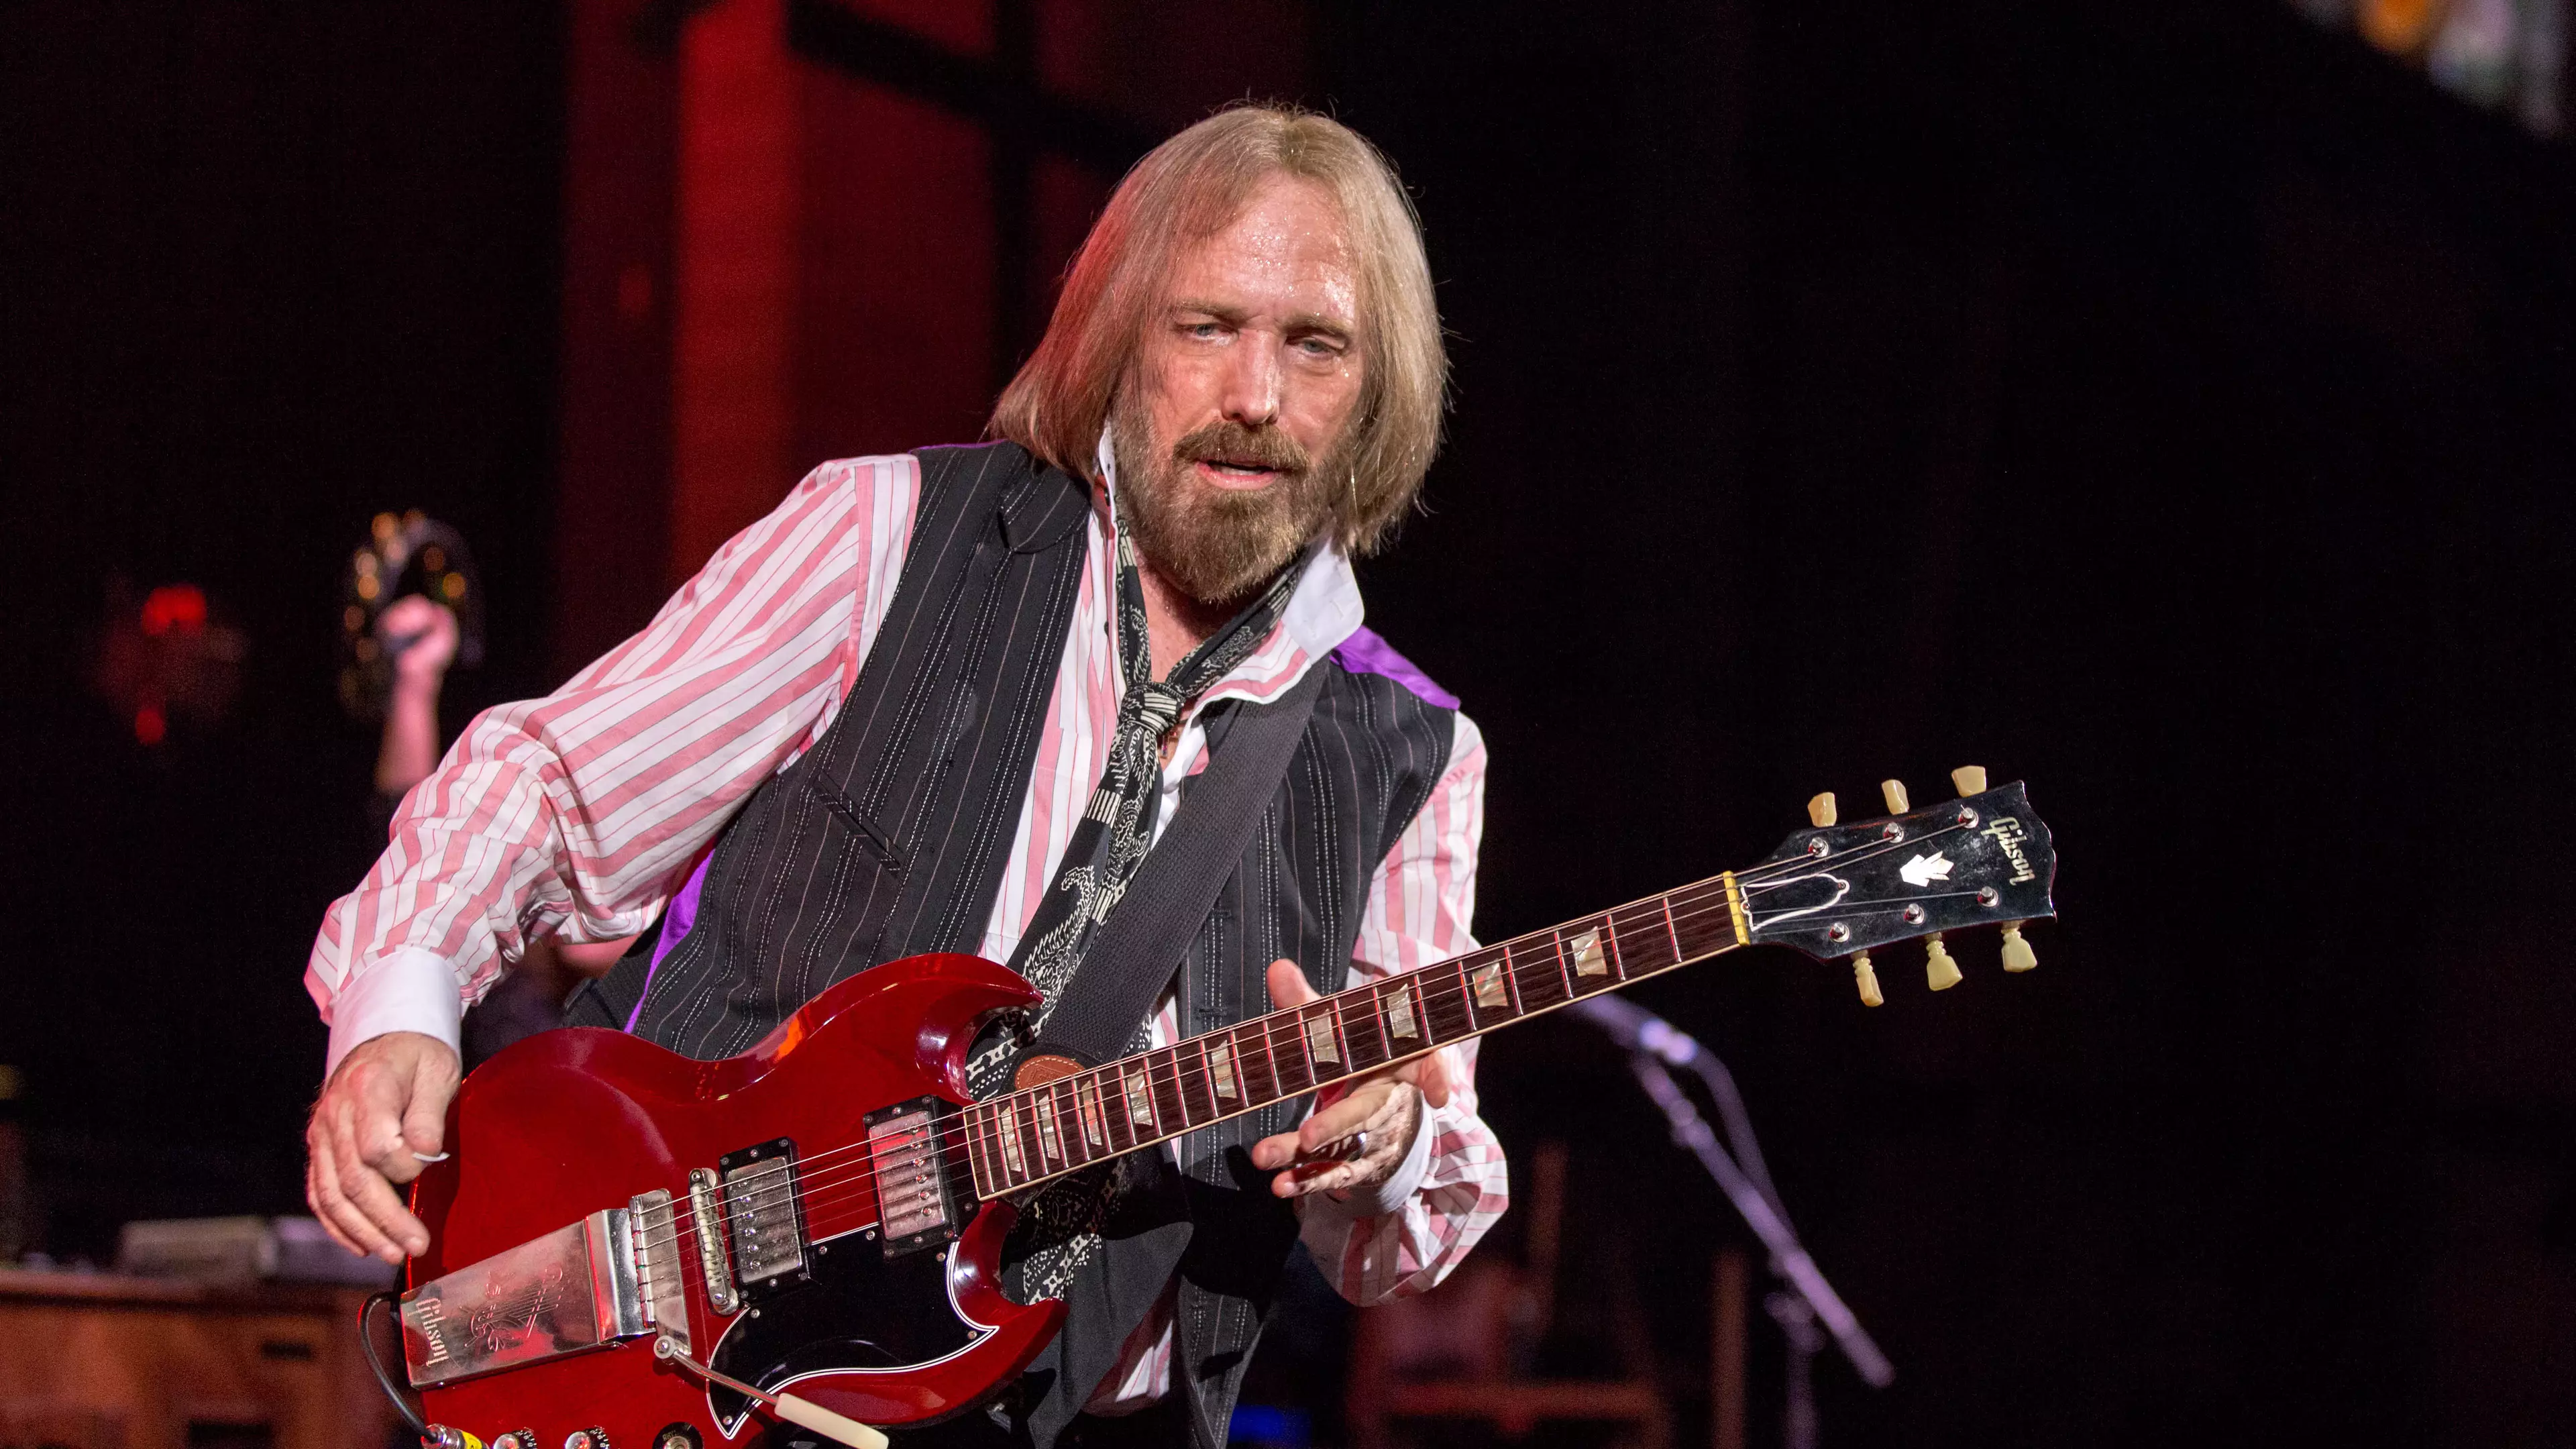 Singer Tom Petty Has Been Taken To Hospital After Suffering Cardiac Arrest